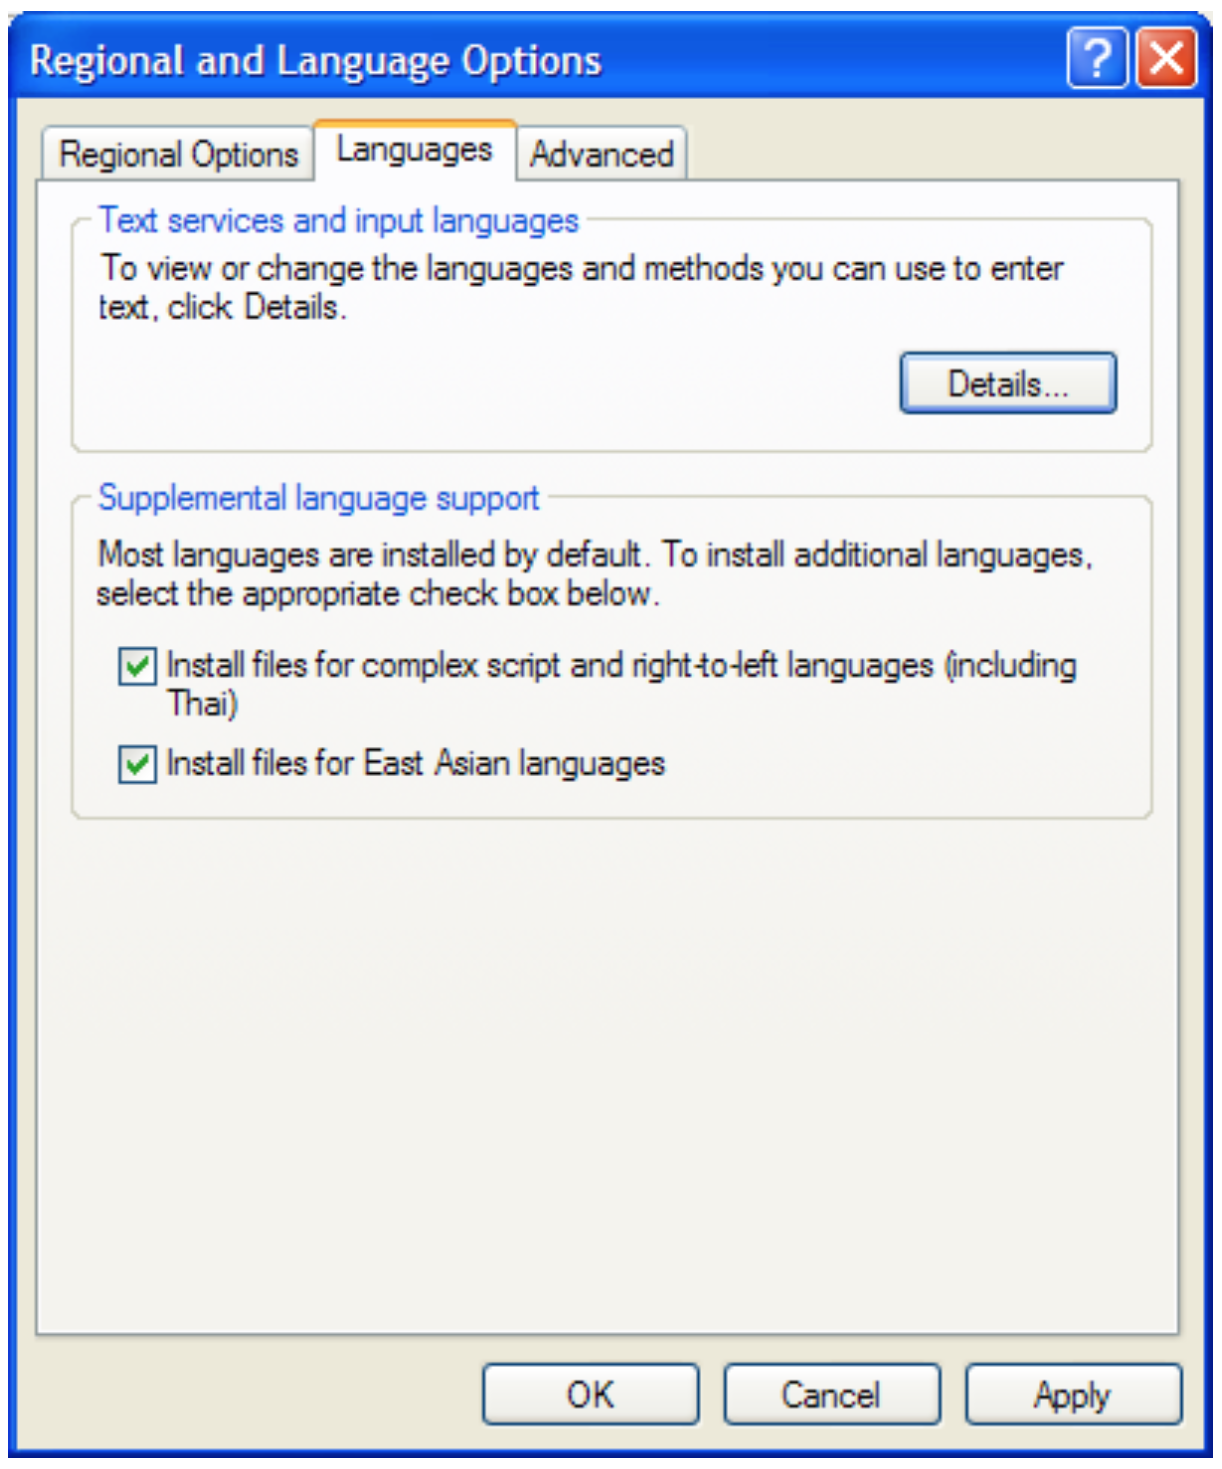 Regional and Language dialog box